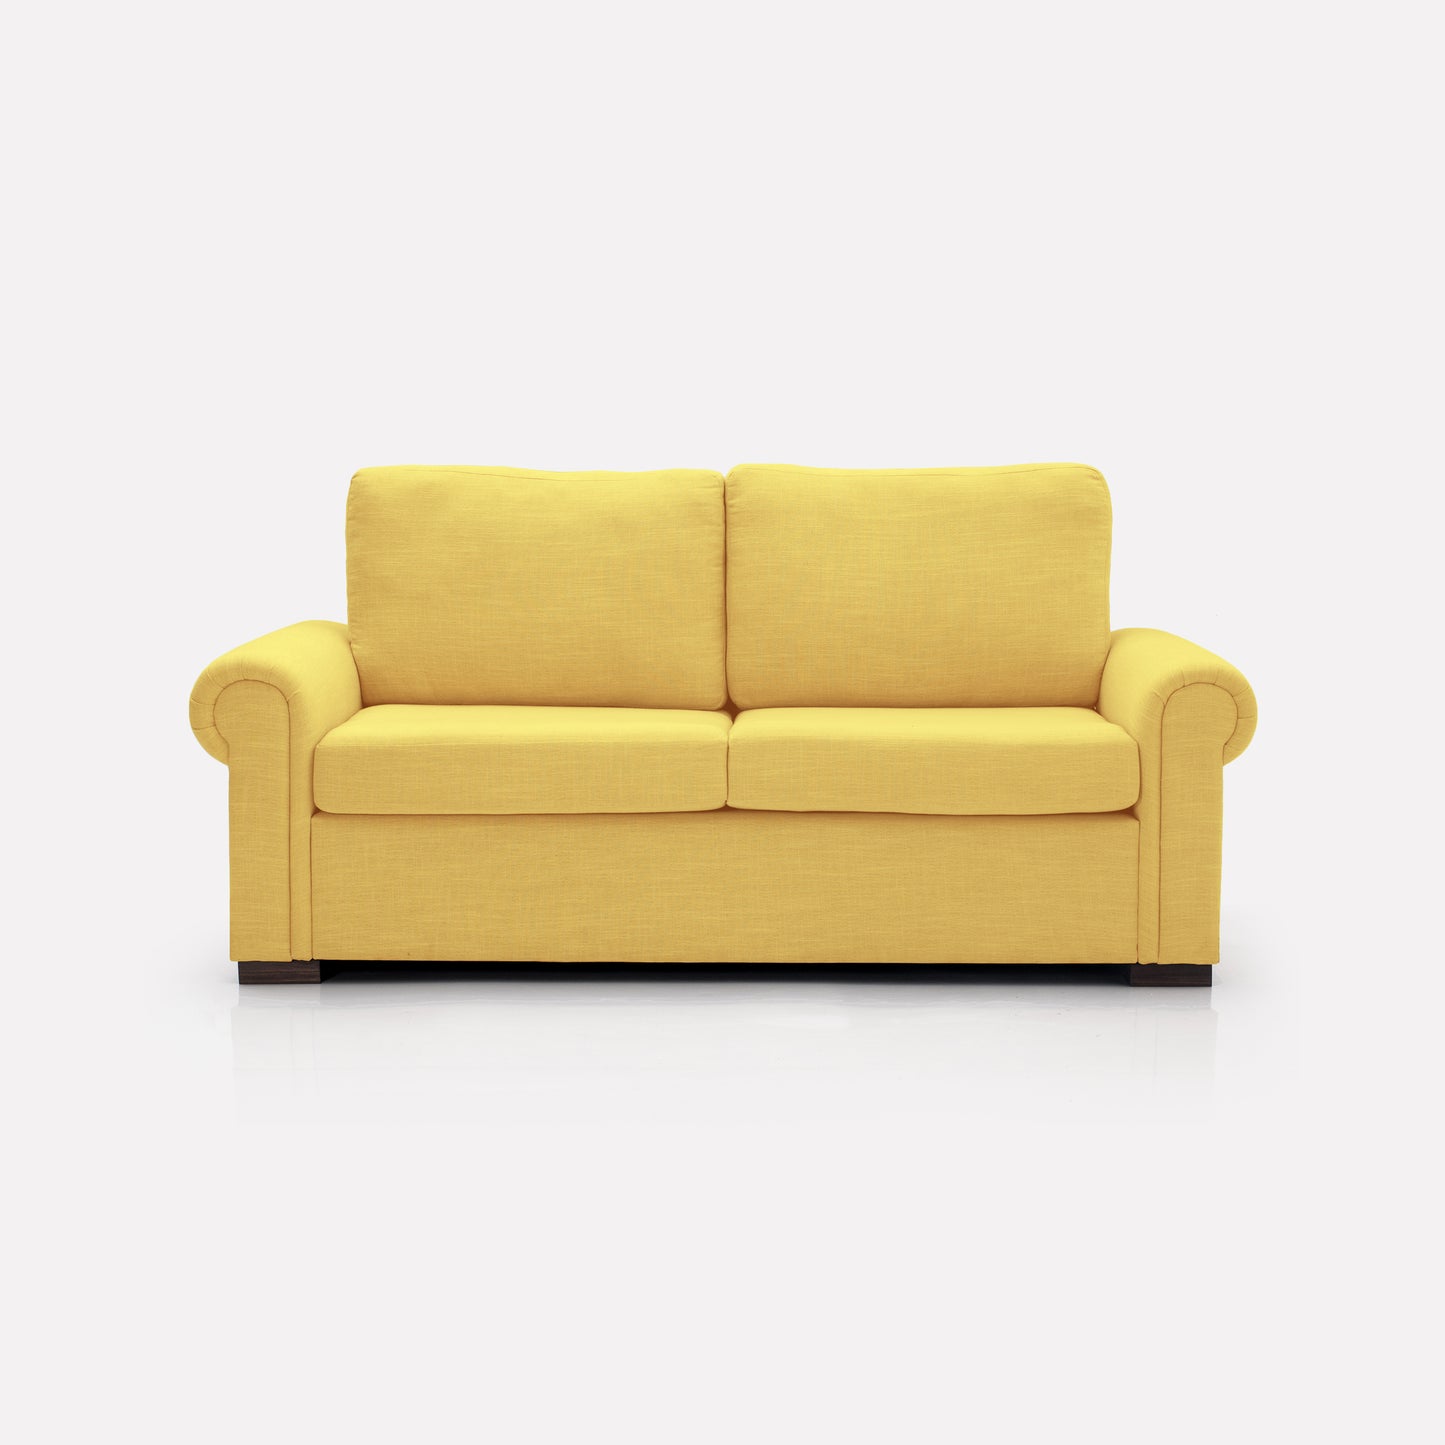 The Doncaster Junior Sofa